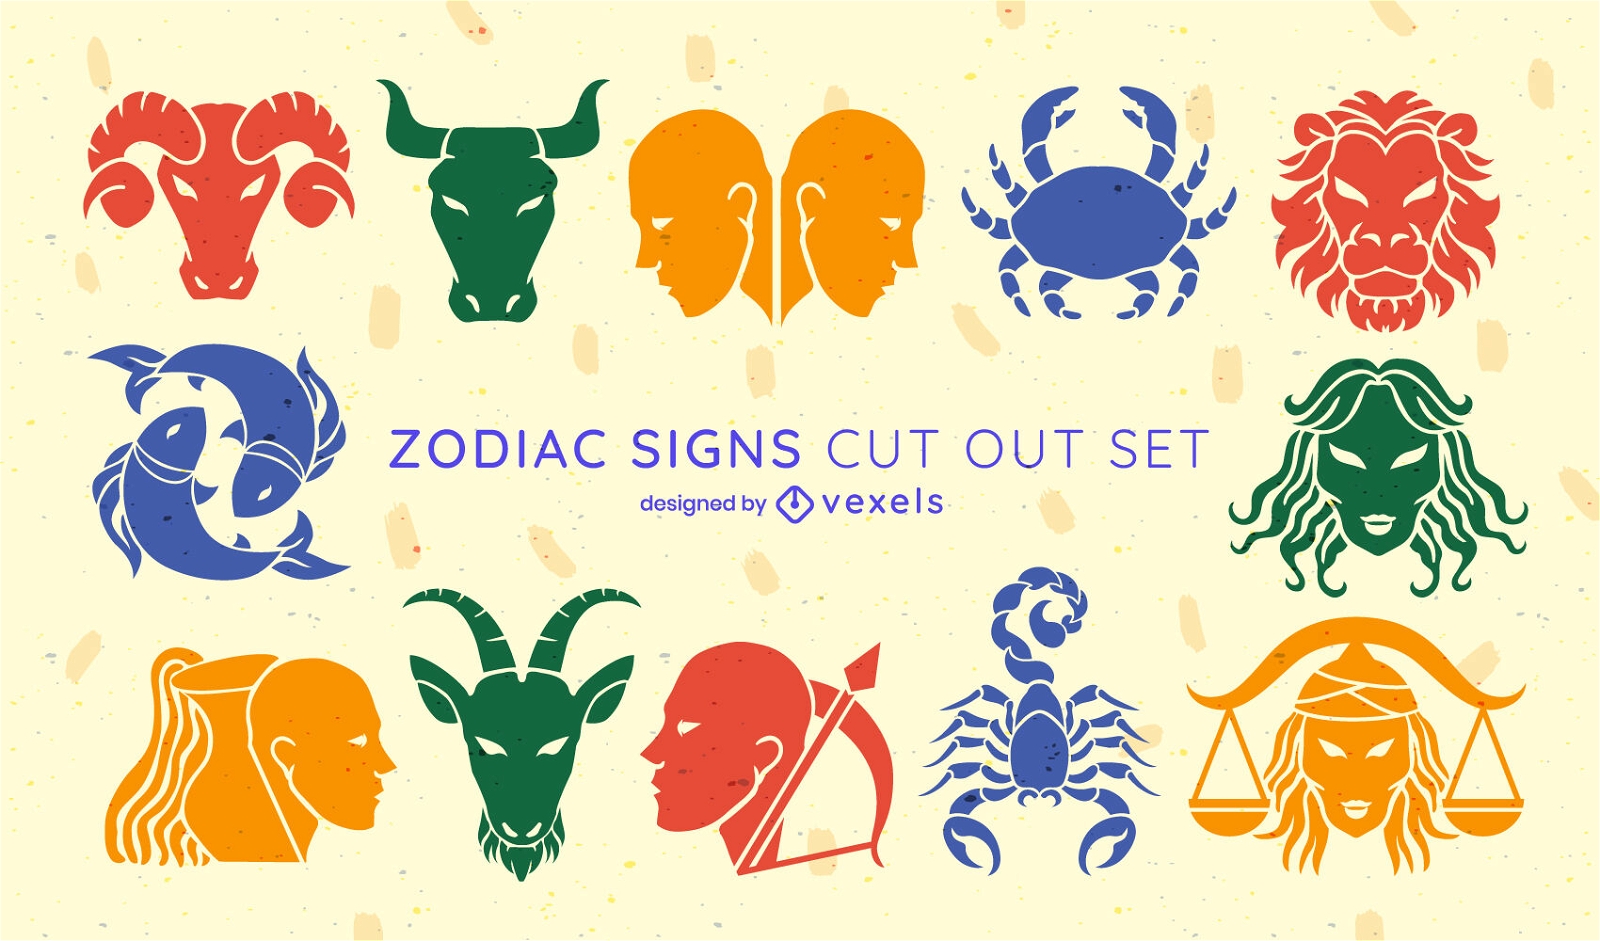 what dog breed am i based on my zodiac sign